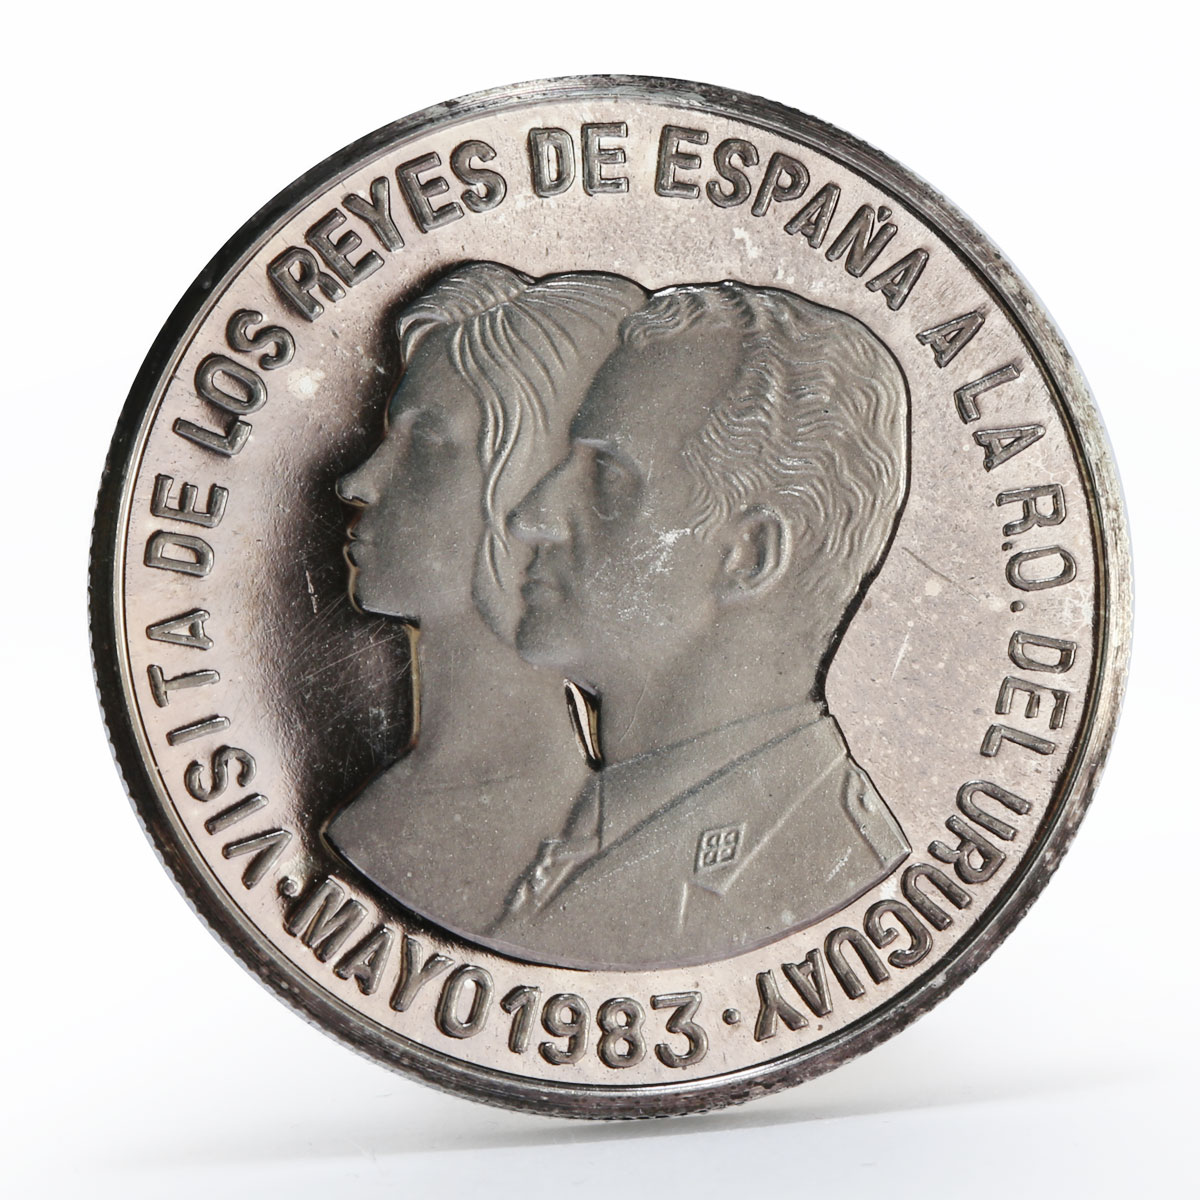 Uruguay 20000 pesos King and Queen prueba coin 1983